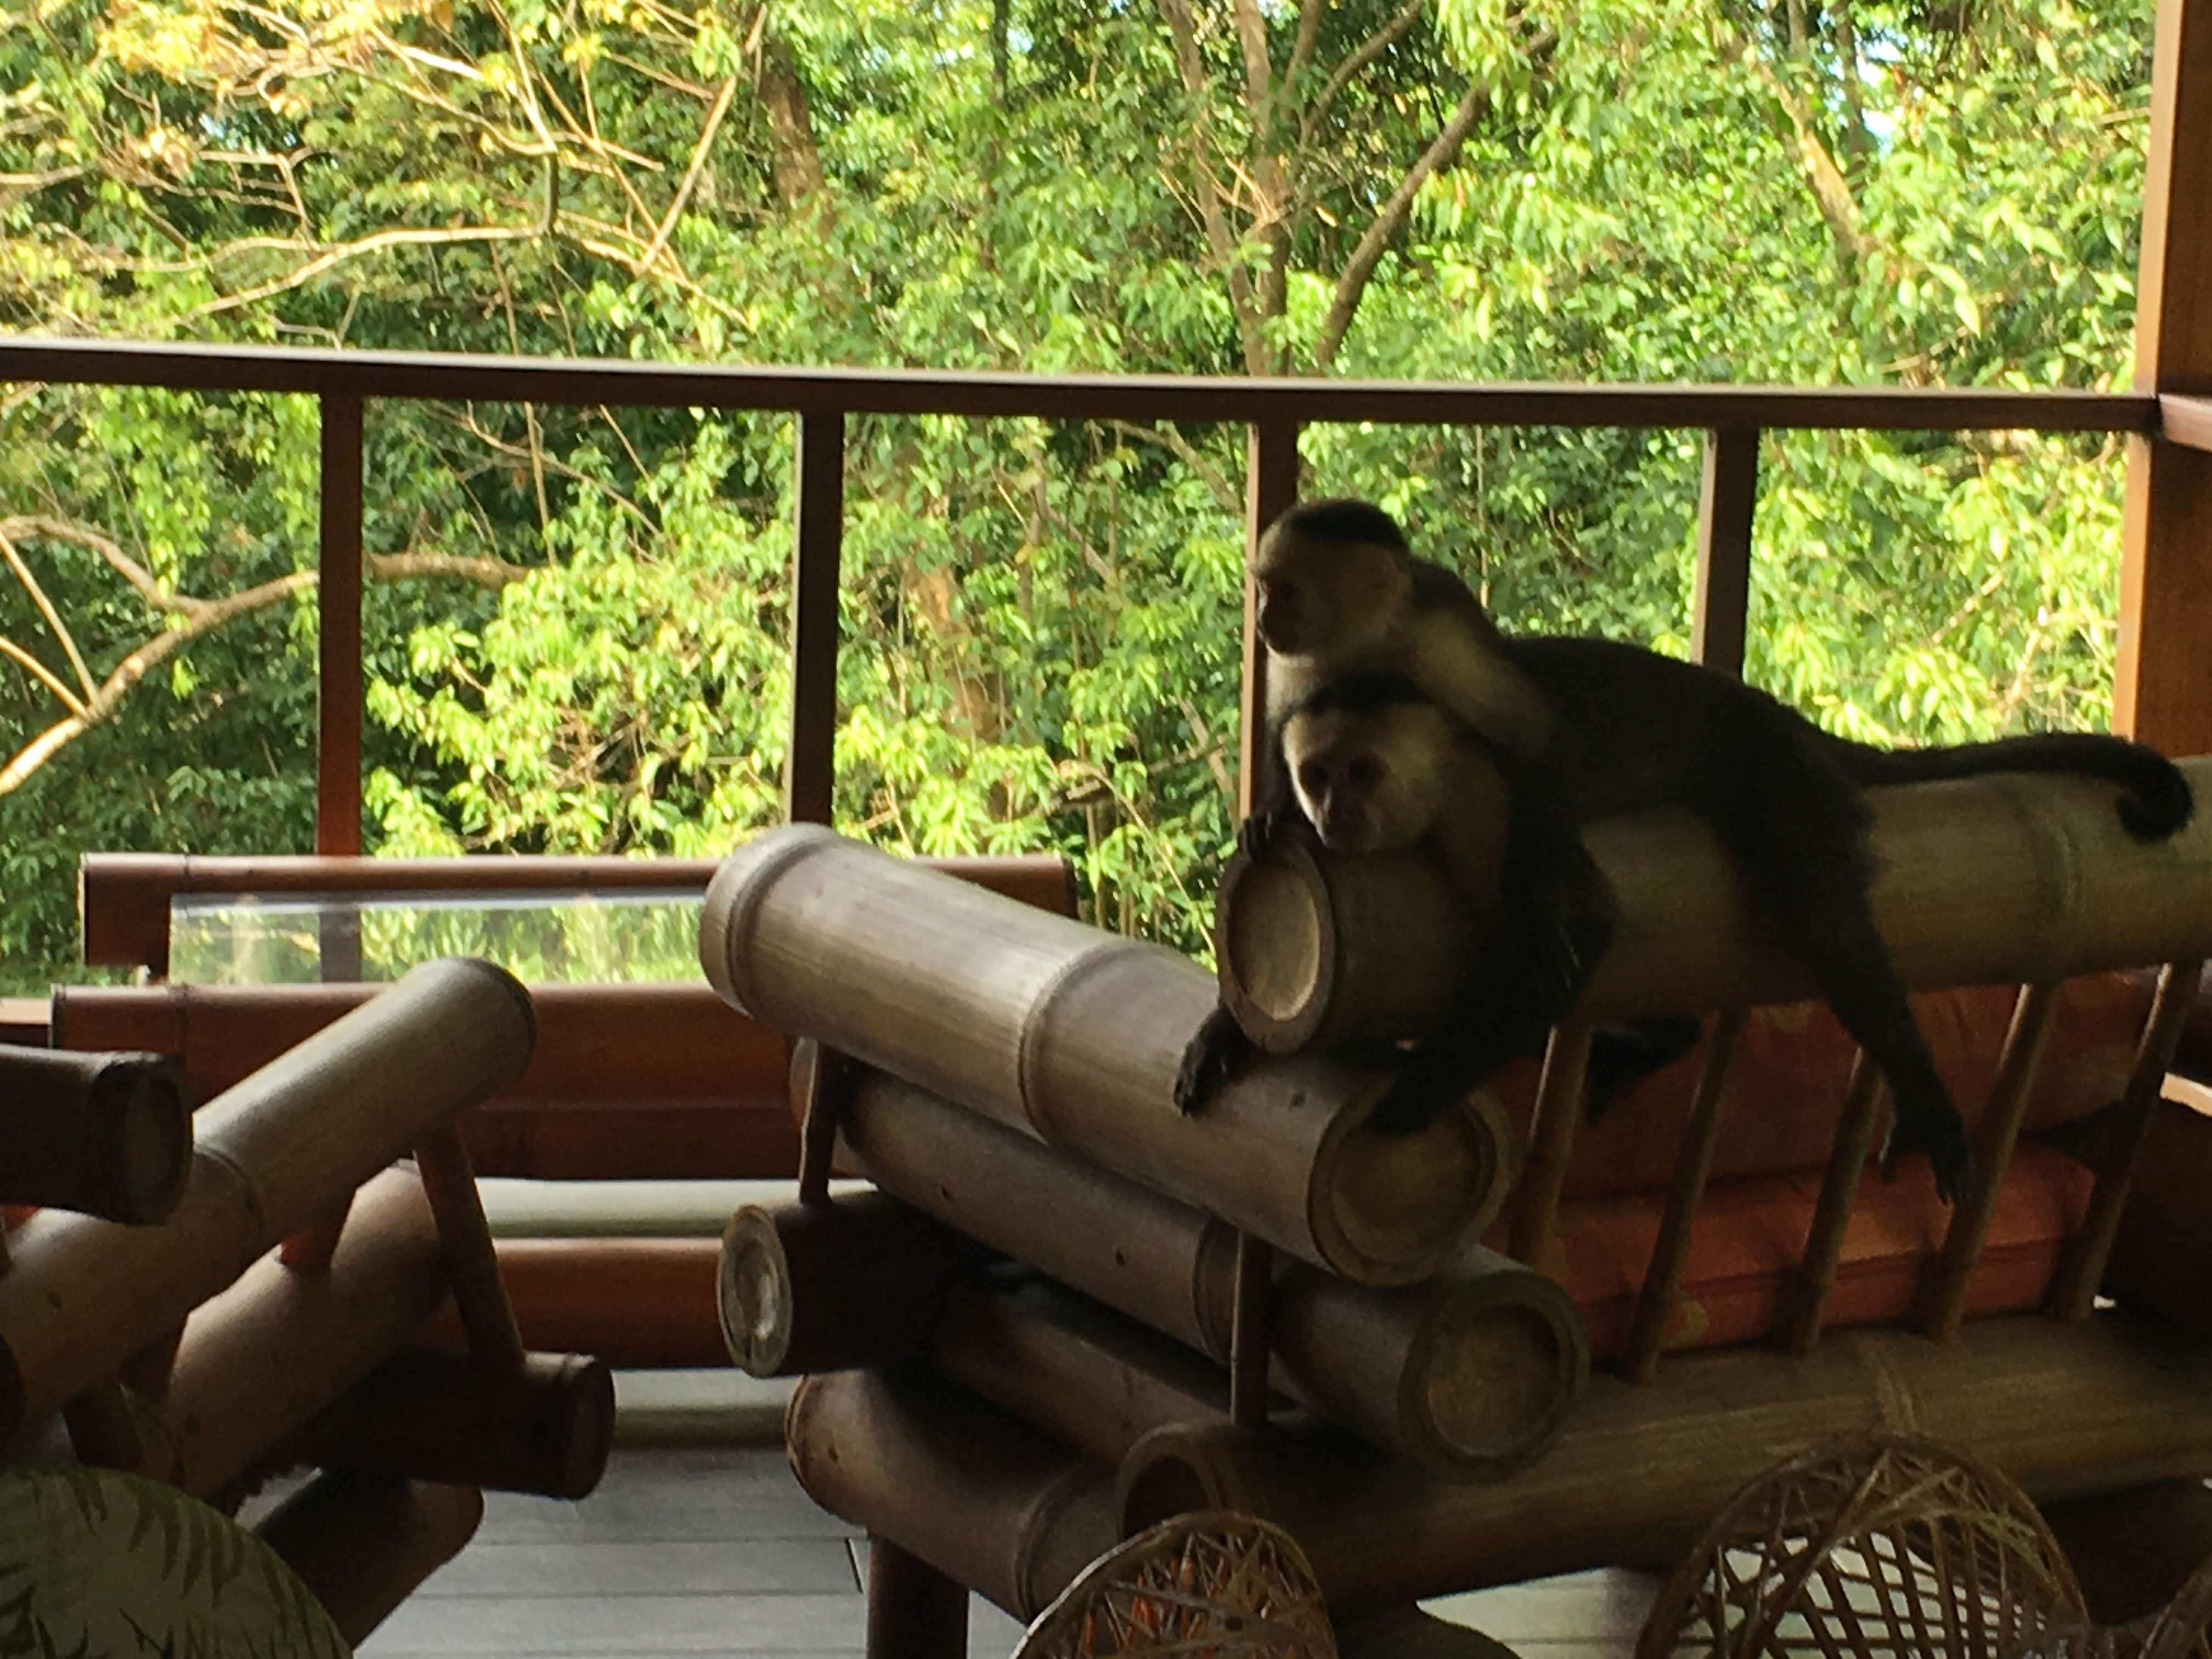 Monkeys on the balcony